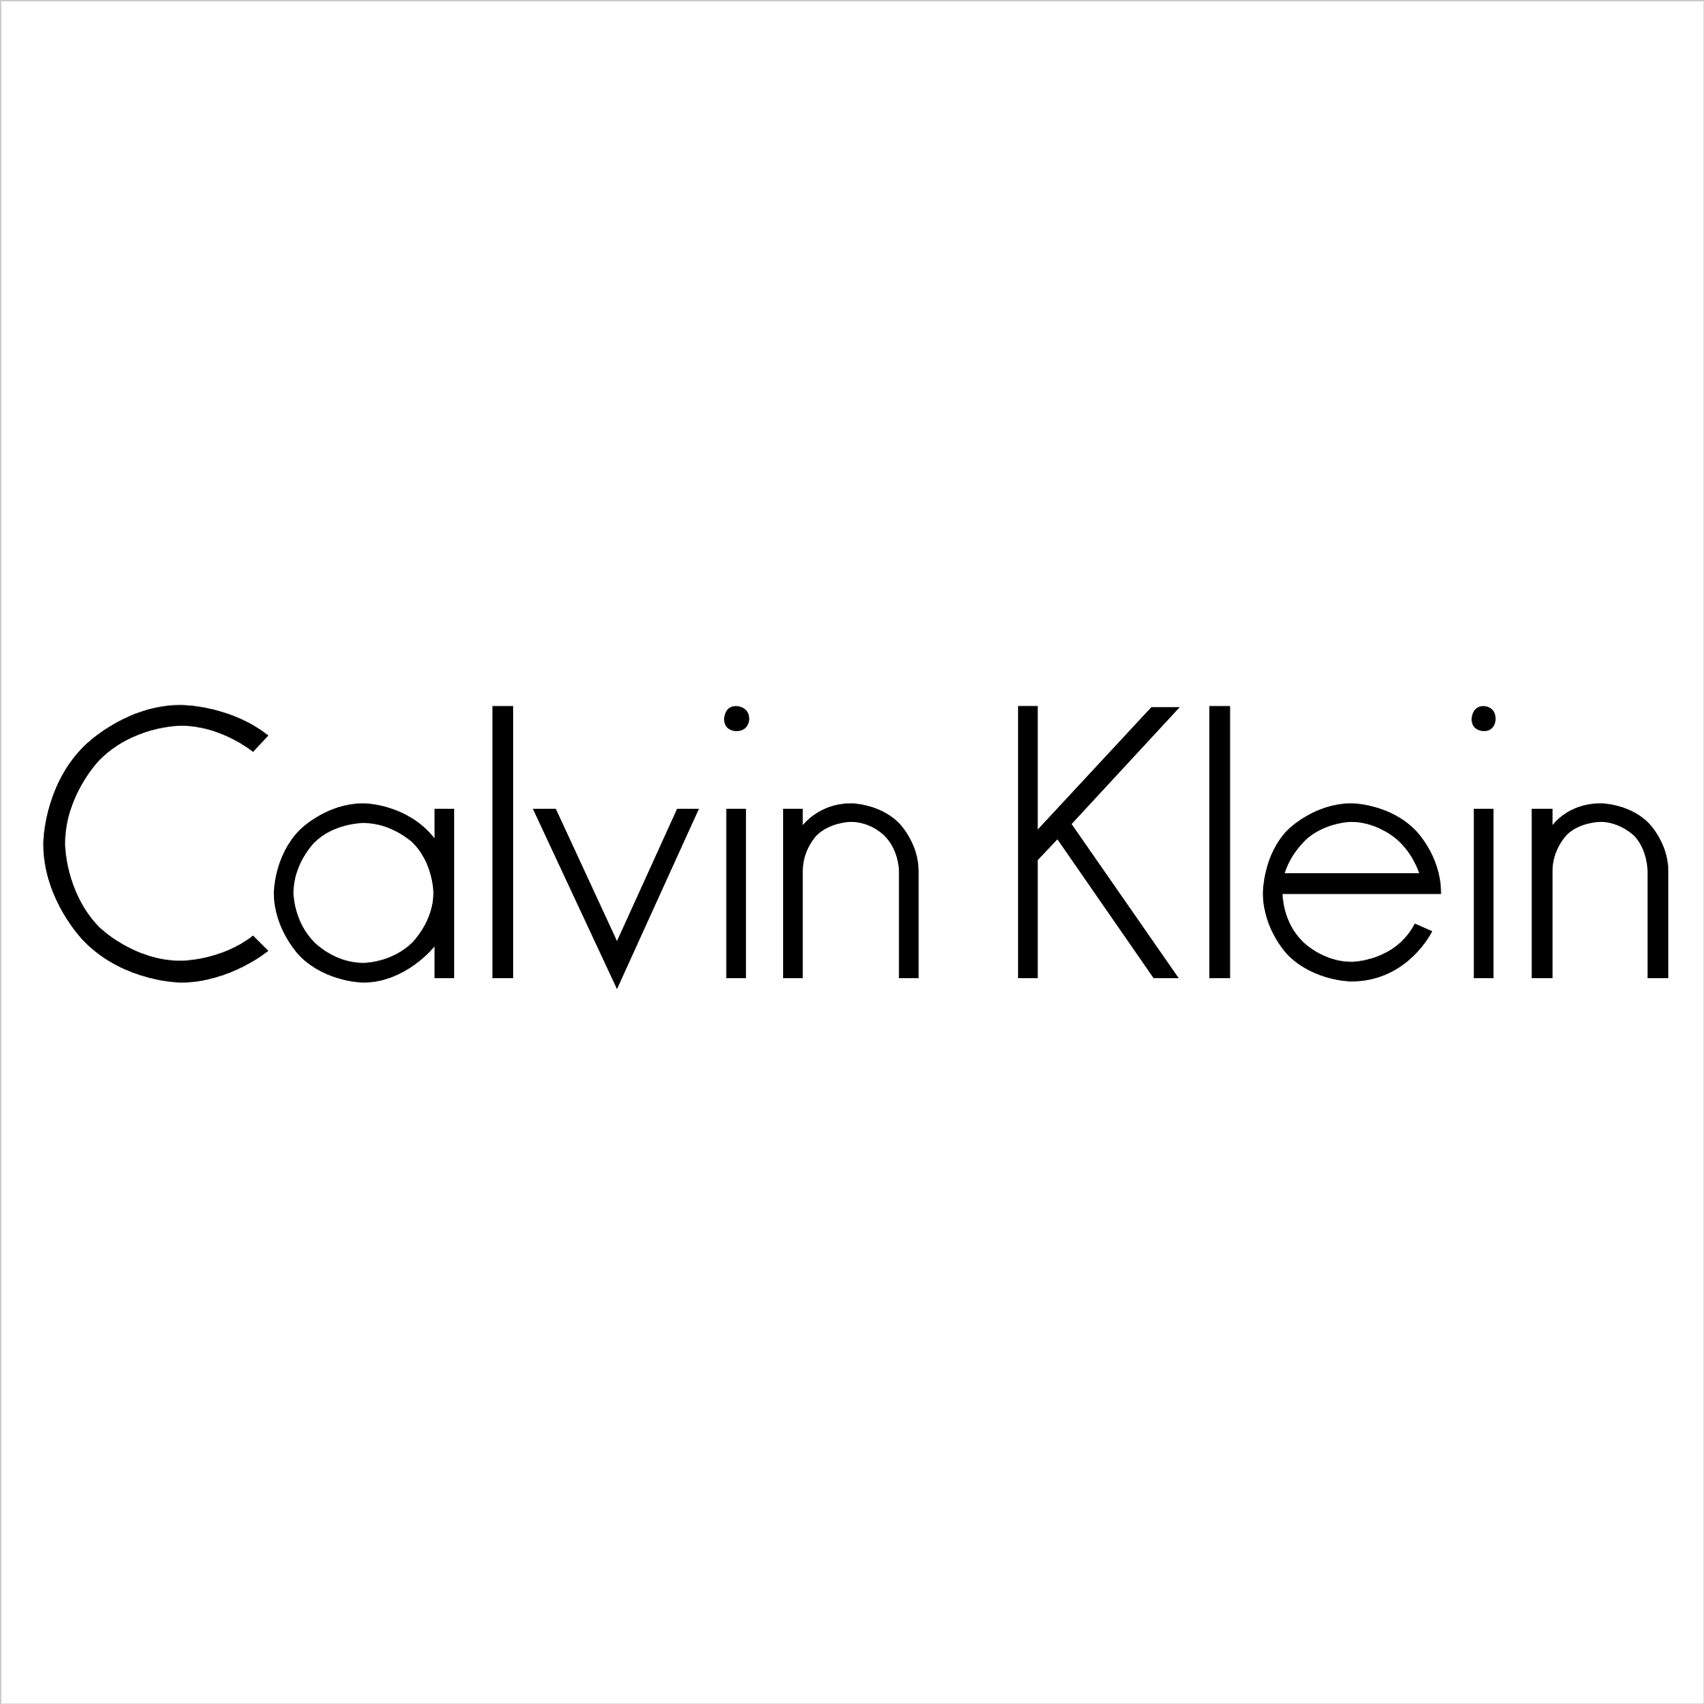 Every $100 Spend @ Calvin Klein